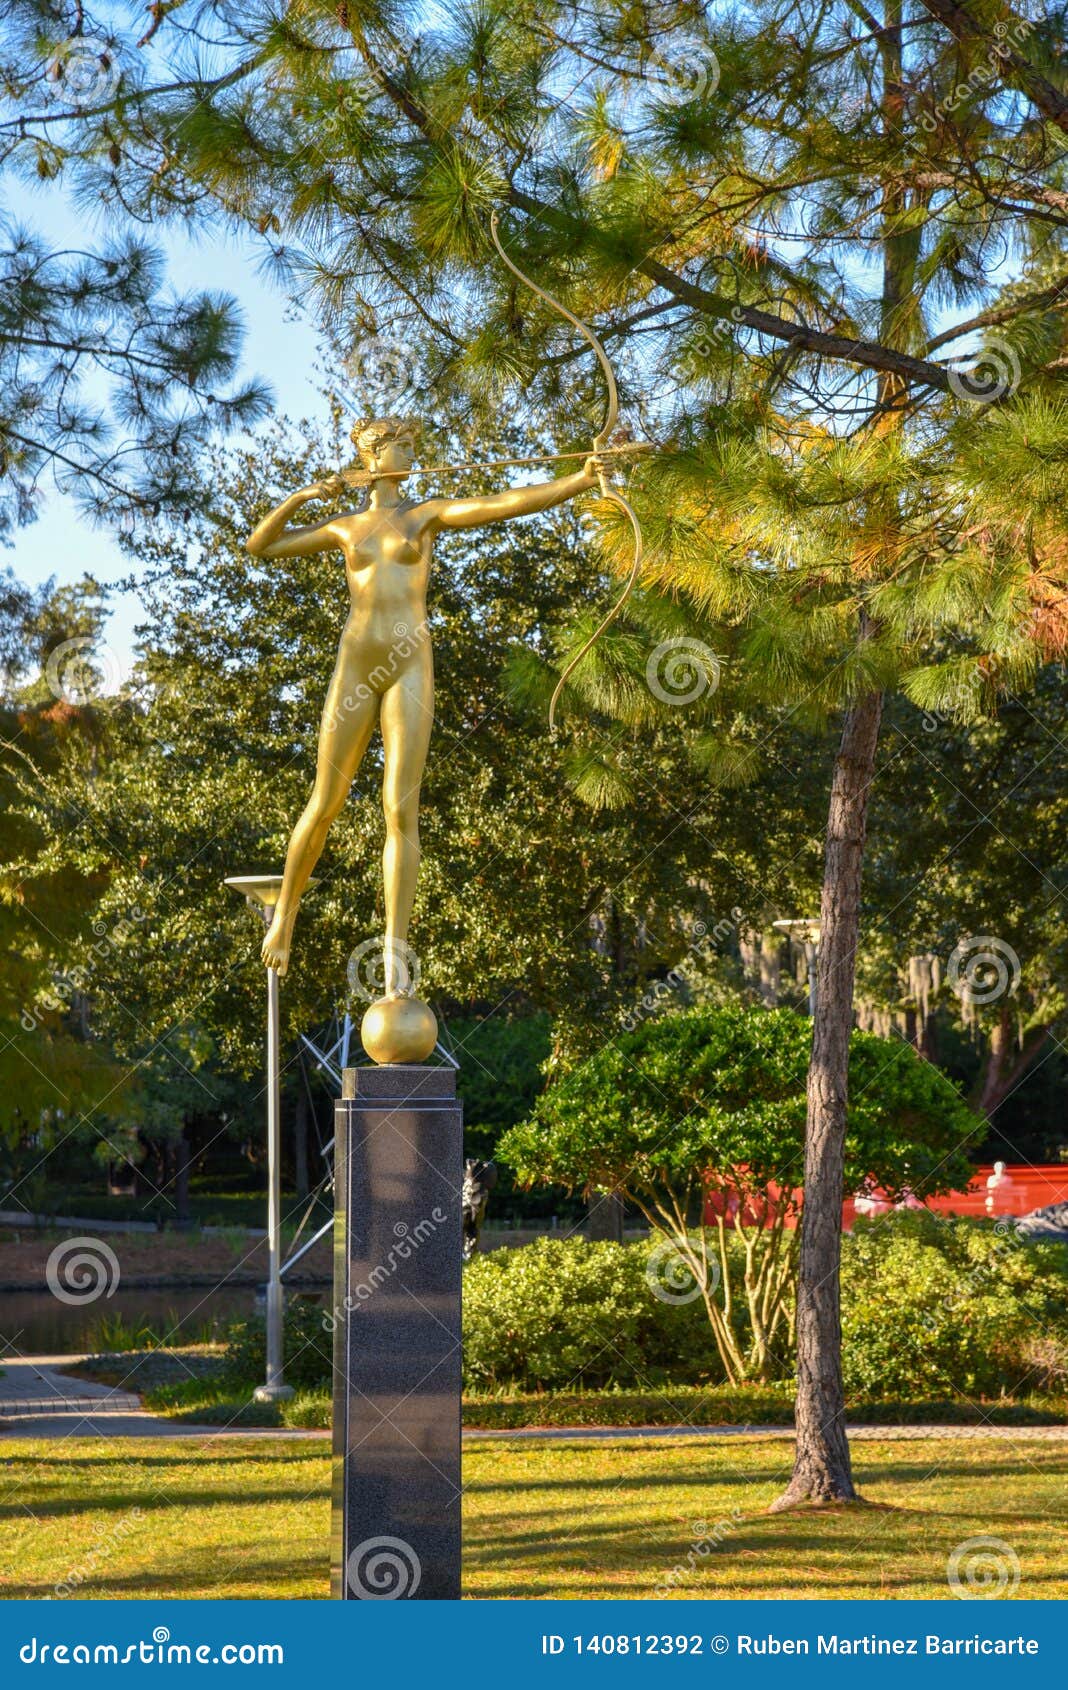 golden archer the sculpture garden in new orleans museum of art (noma